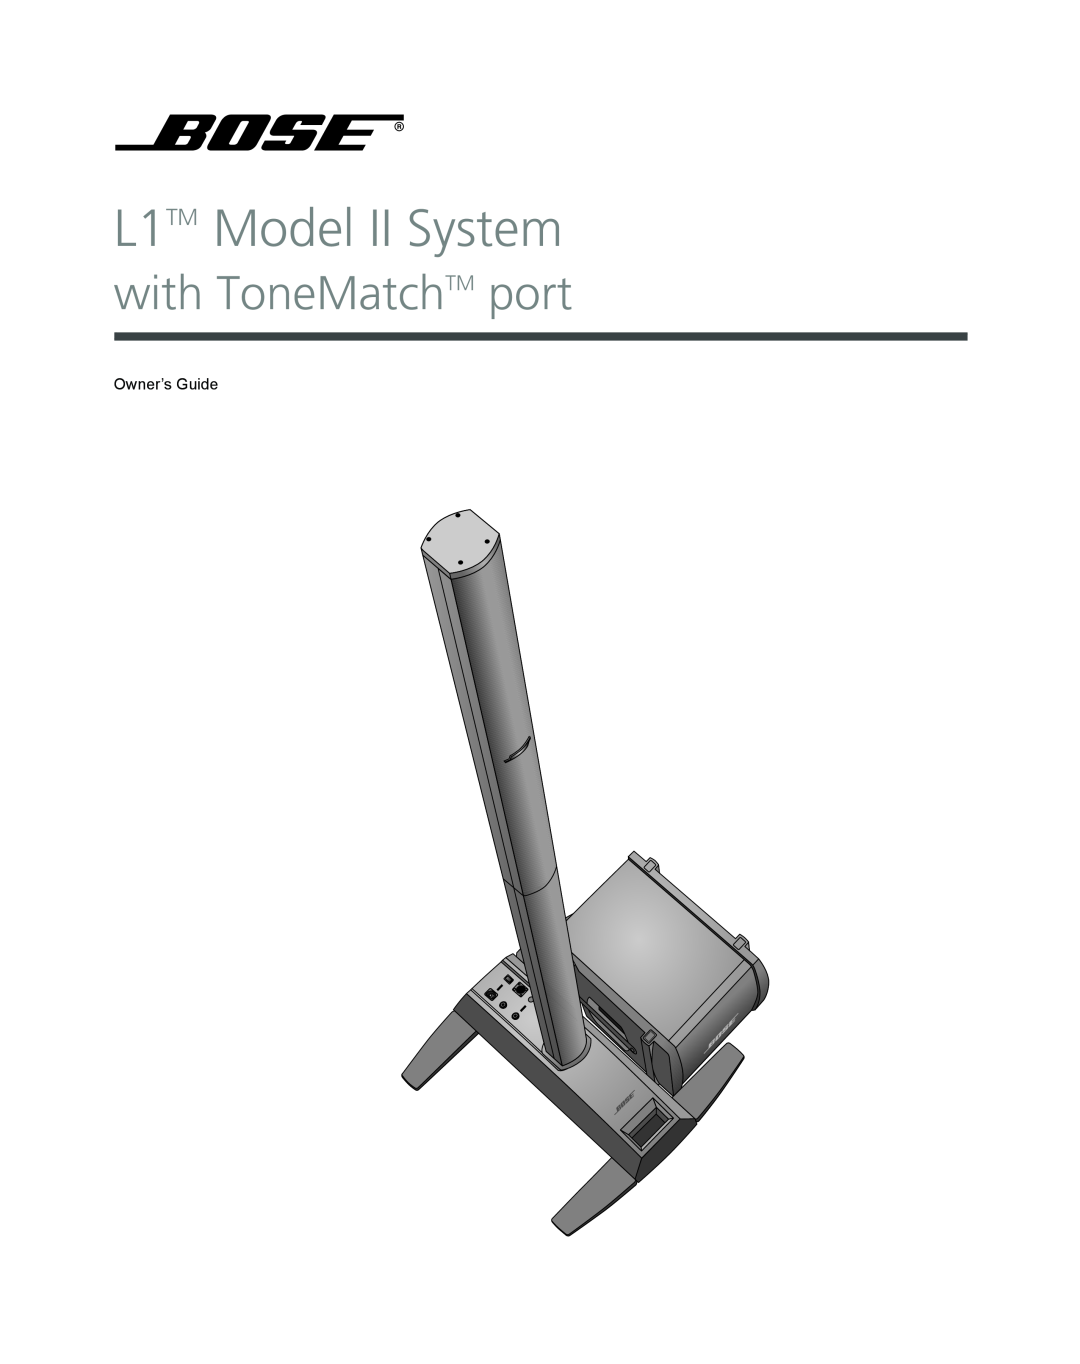 Bose L1 Model II manual L1TM Model II System, with ToneMatchTM port 